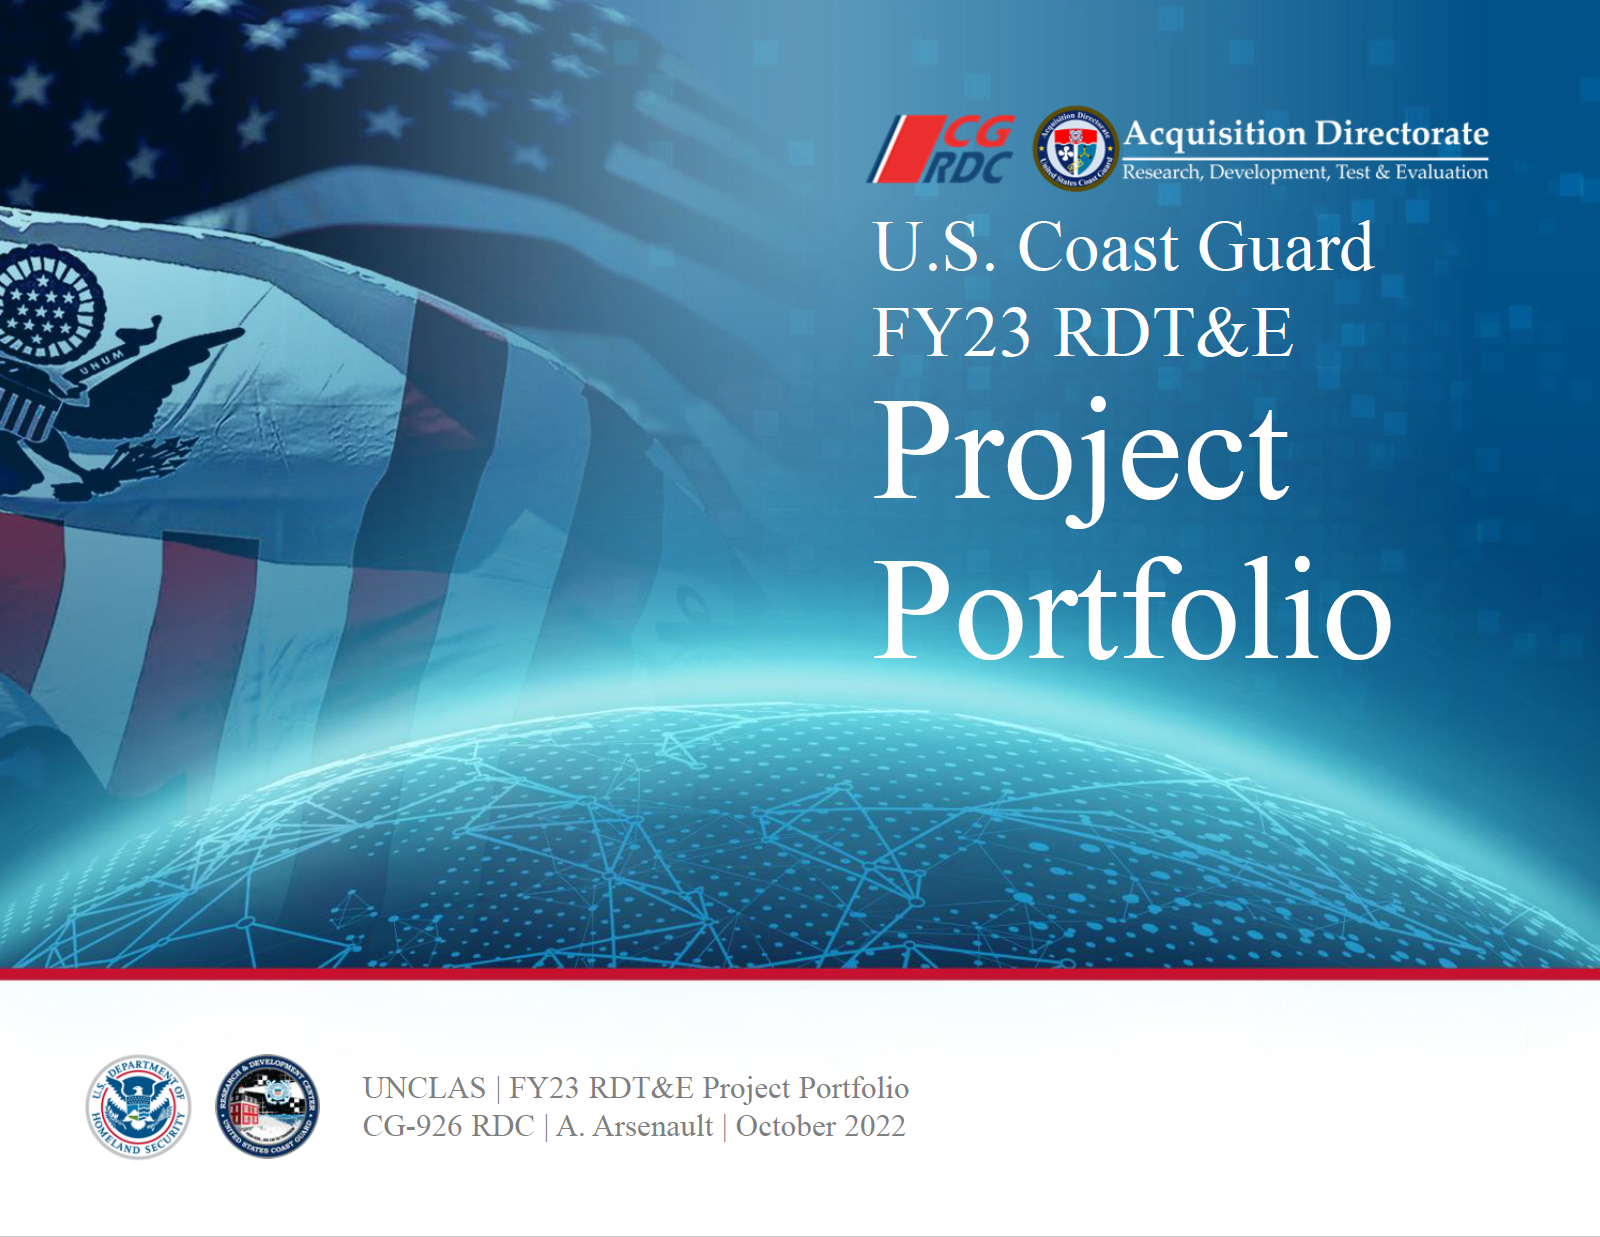 U.S. Coast Guard RDT&E Project Portfolio for FY23